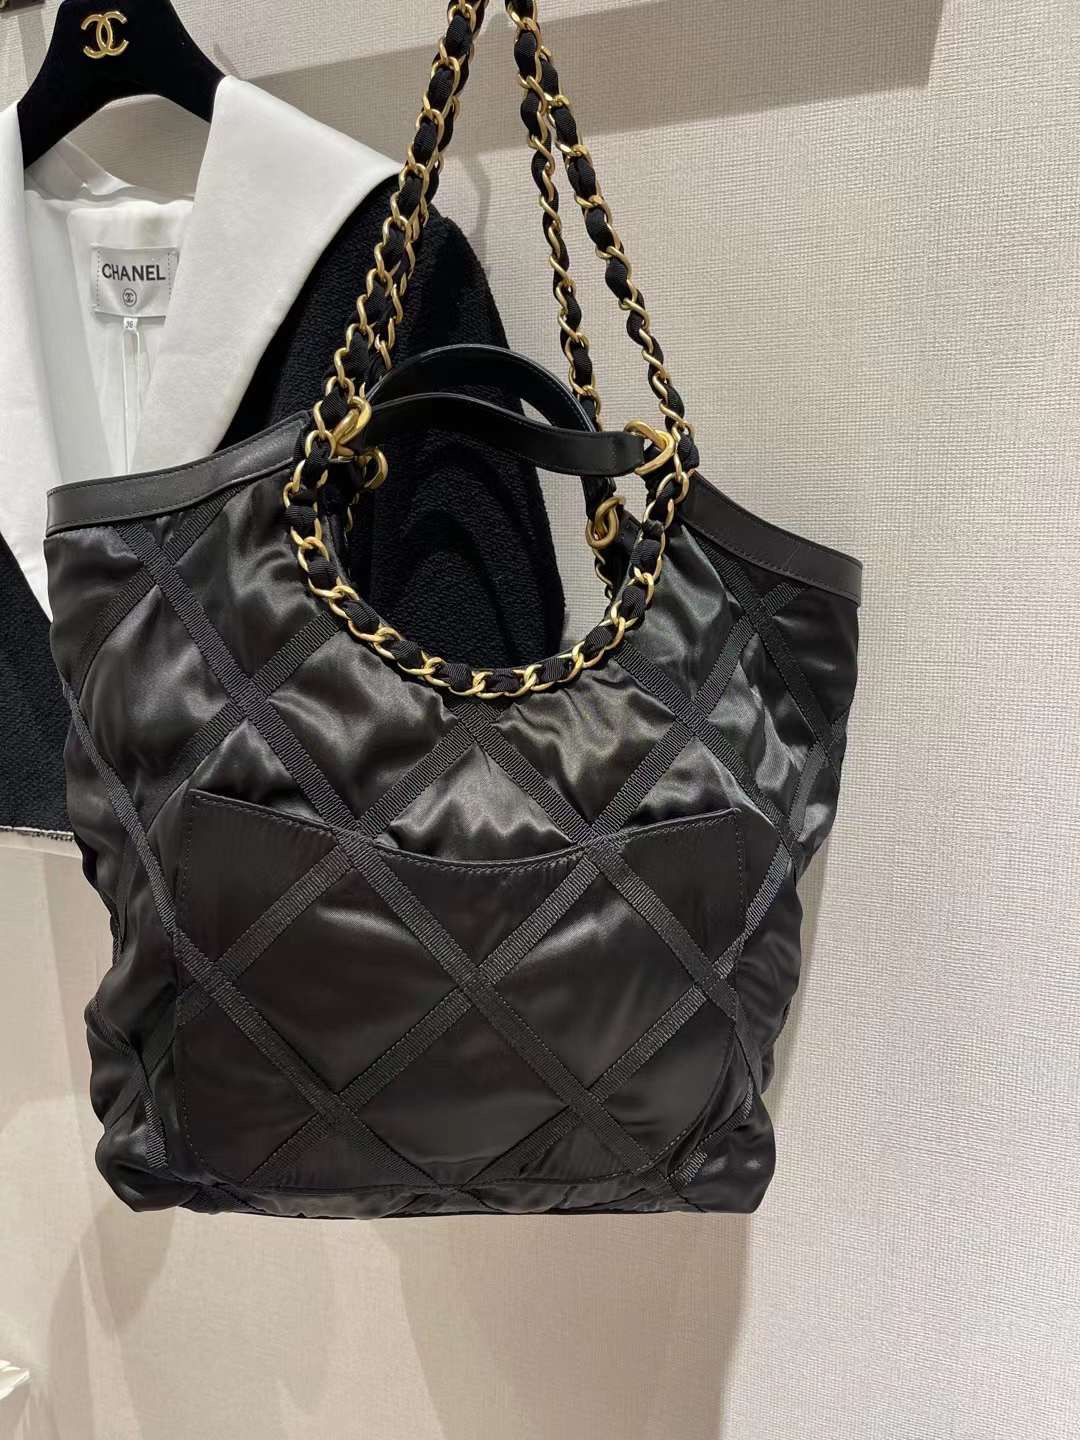 【P1580】香奈儿22年新款包包 Chanel黑色尼龙罗缎金属MAXI购物包妈咪包